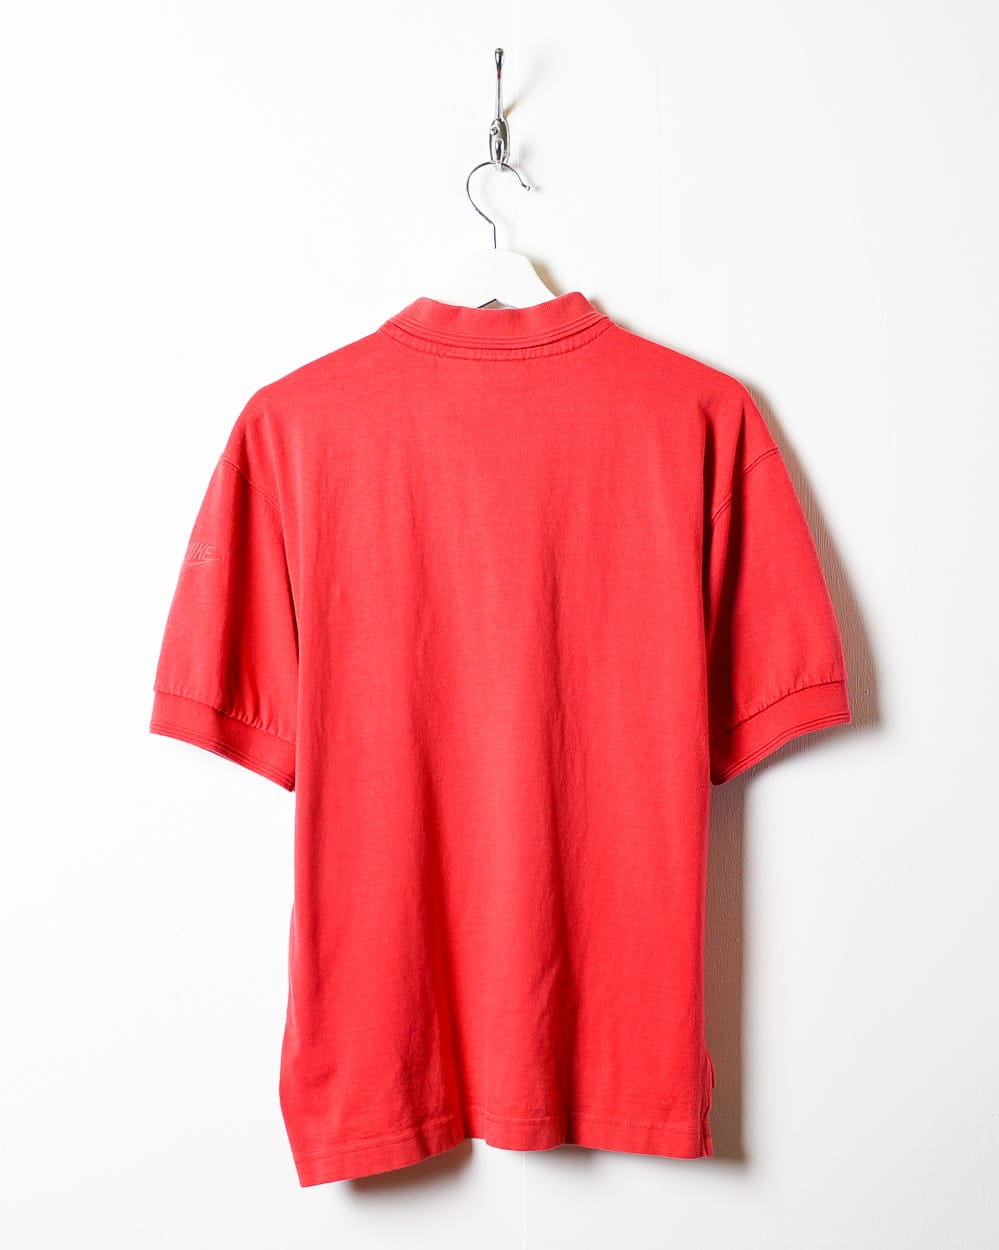 Red Nike Air Jordan Polo Shirt - Small